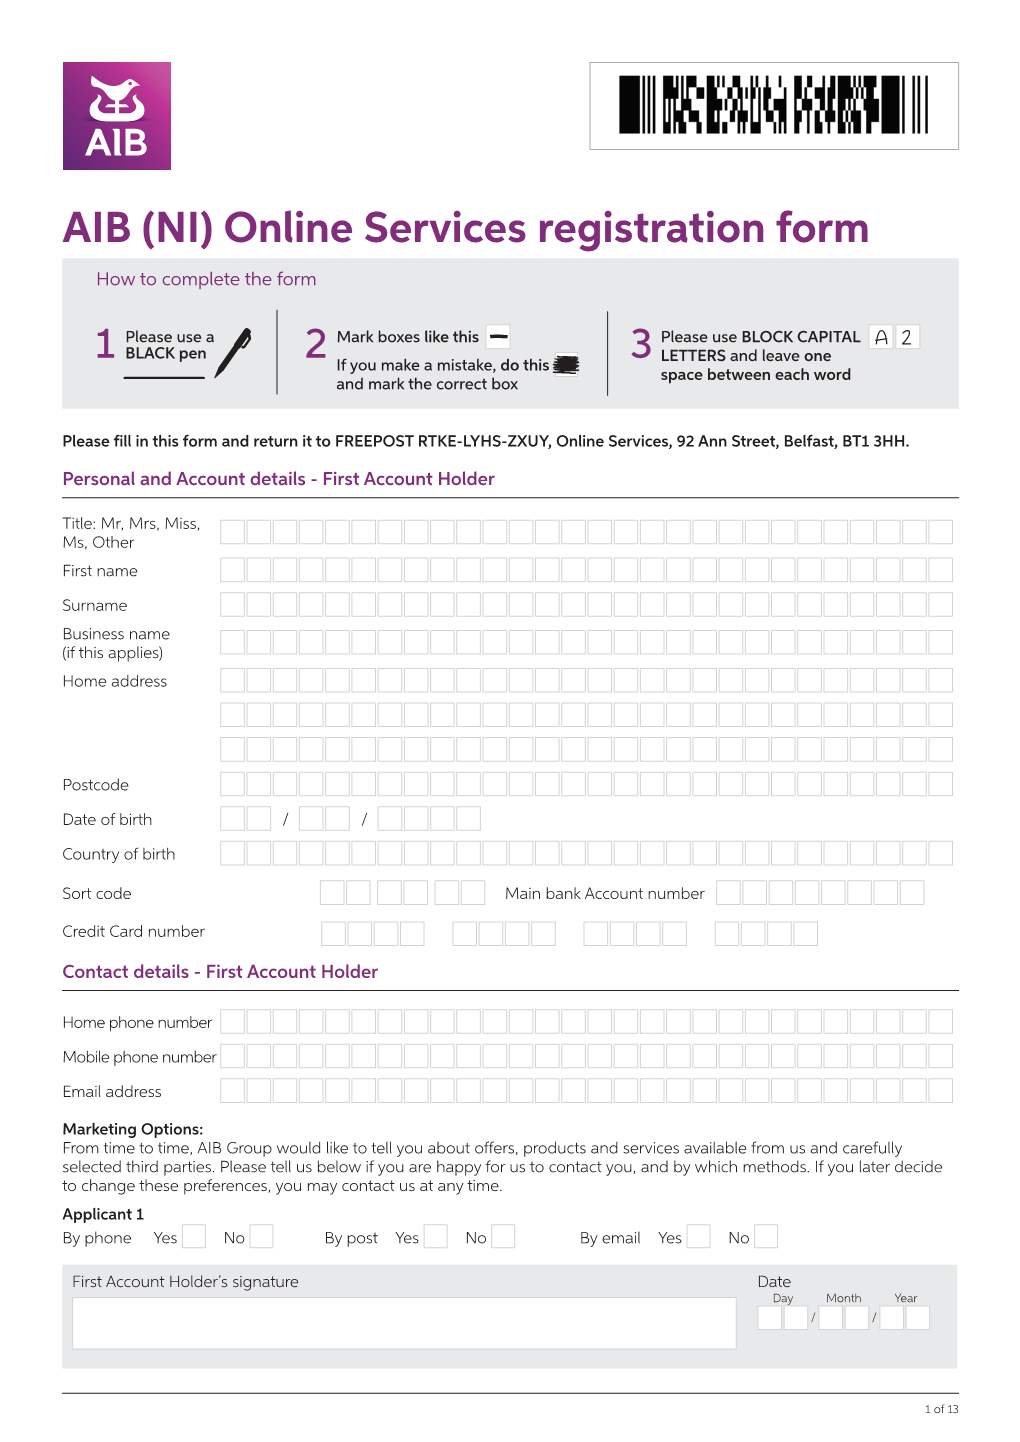 AIB (NI) Online Services Registration Form